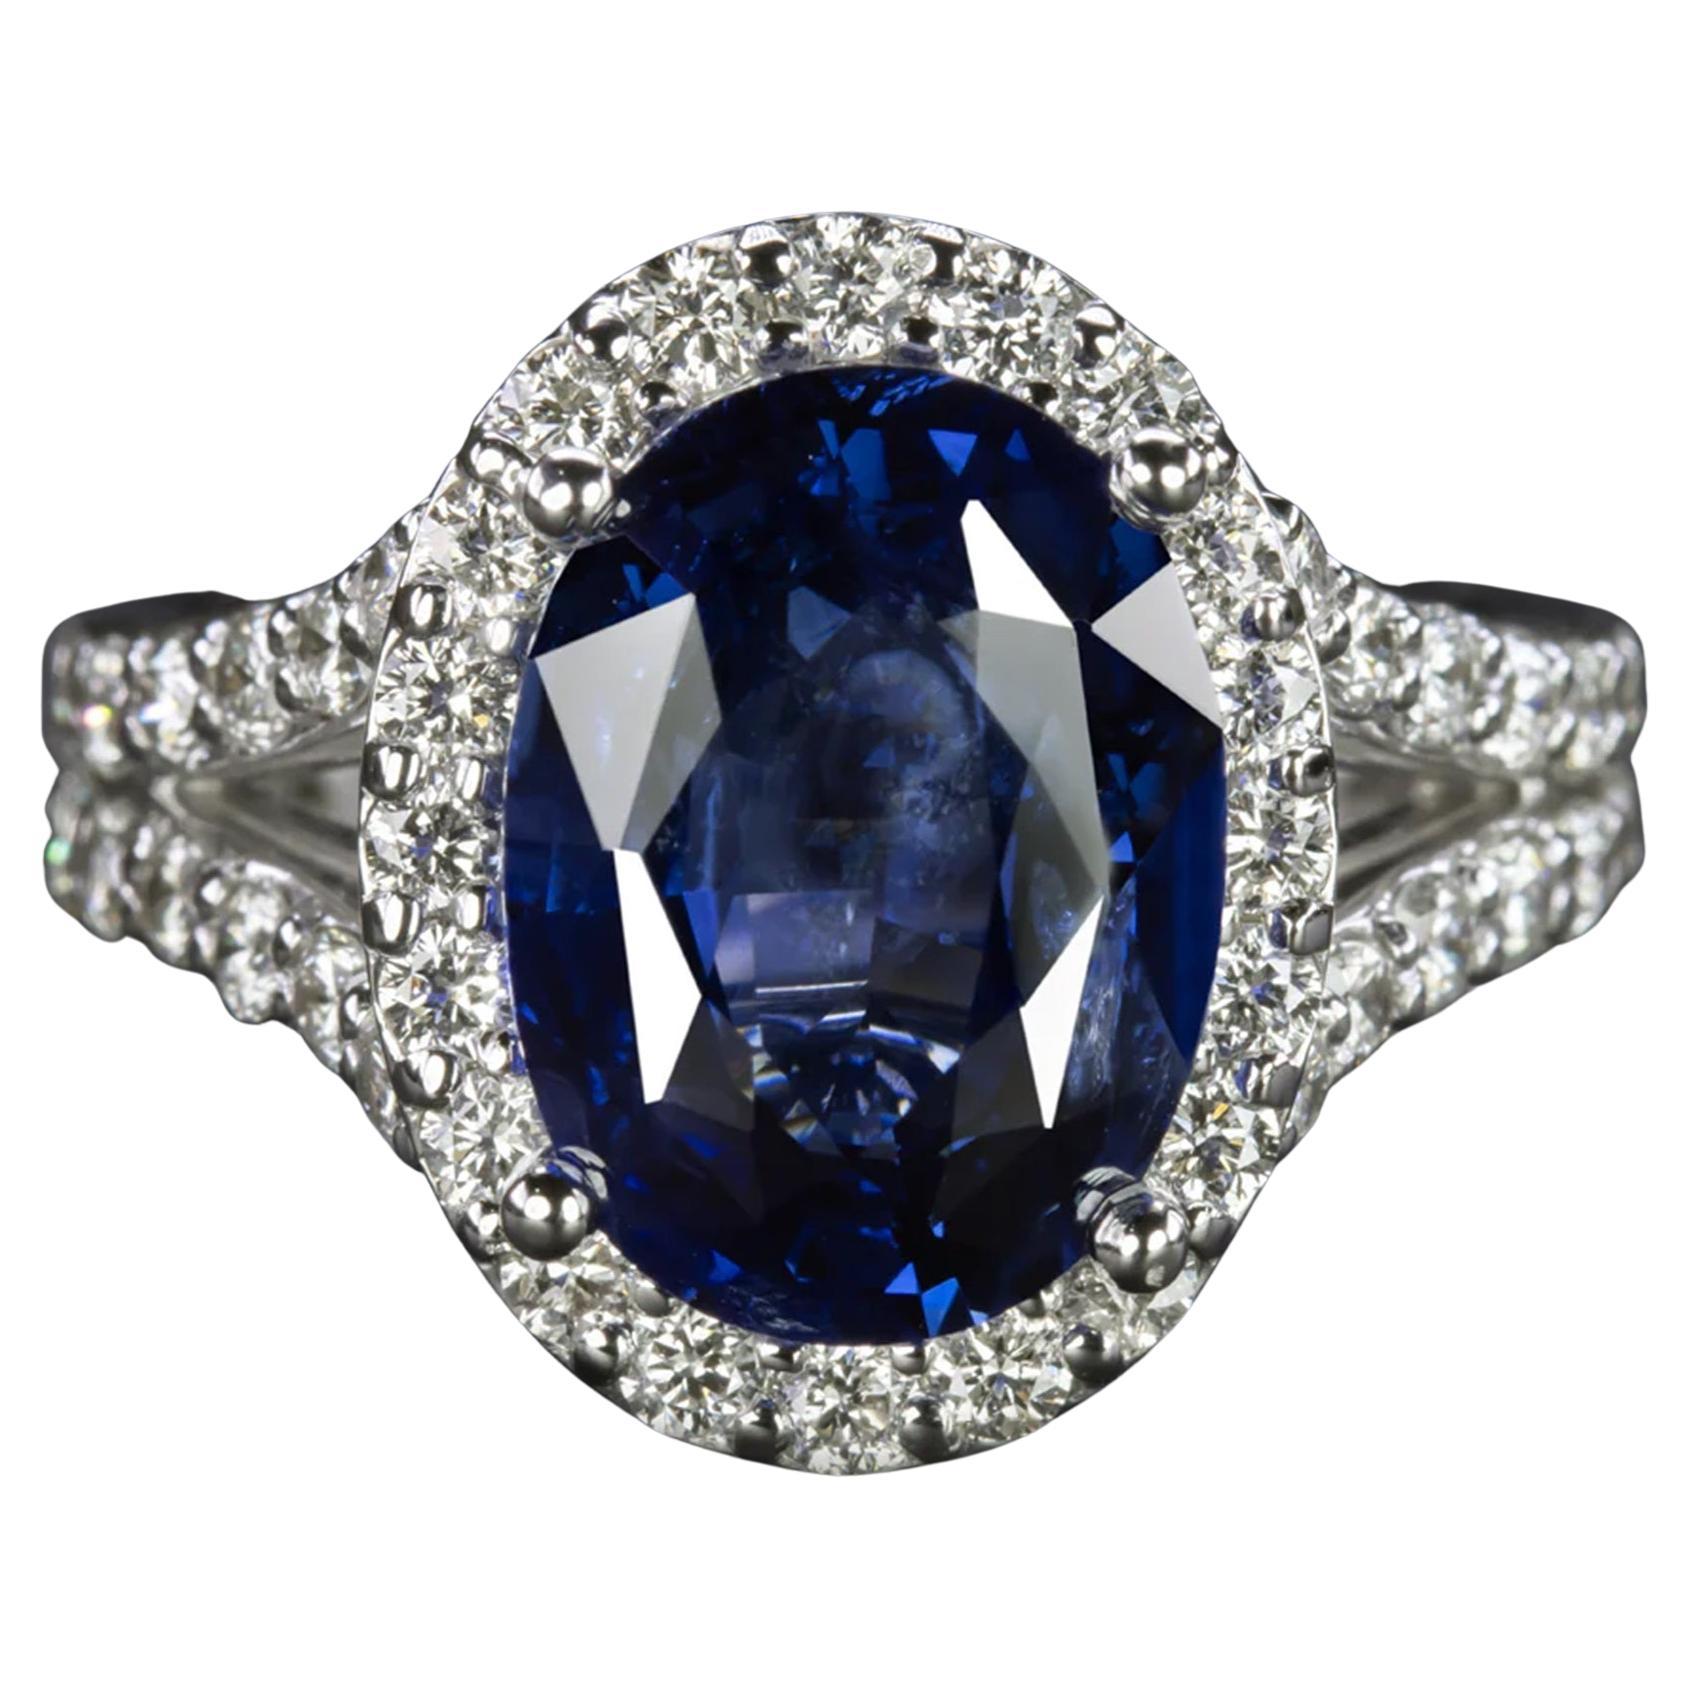 GIA Certified 5.45 Carat Blue Sapphire Diamond Ring